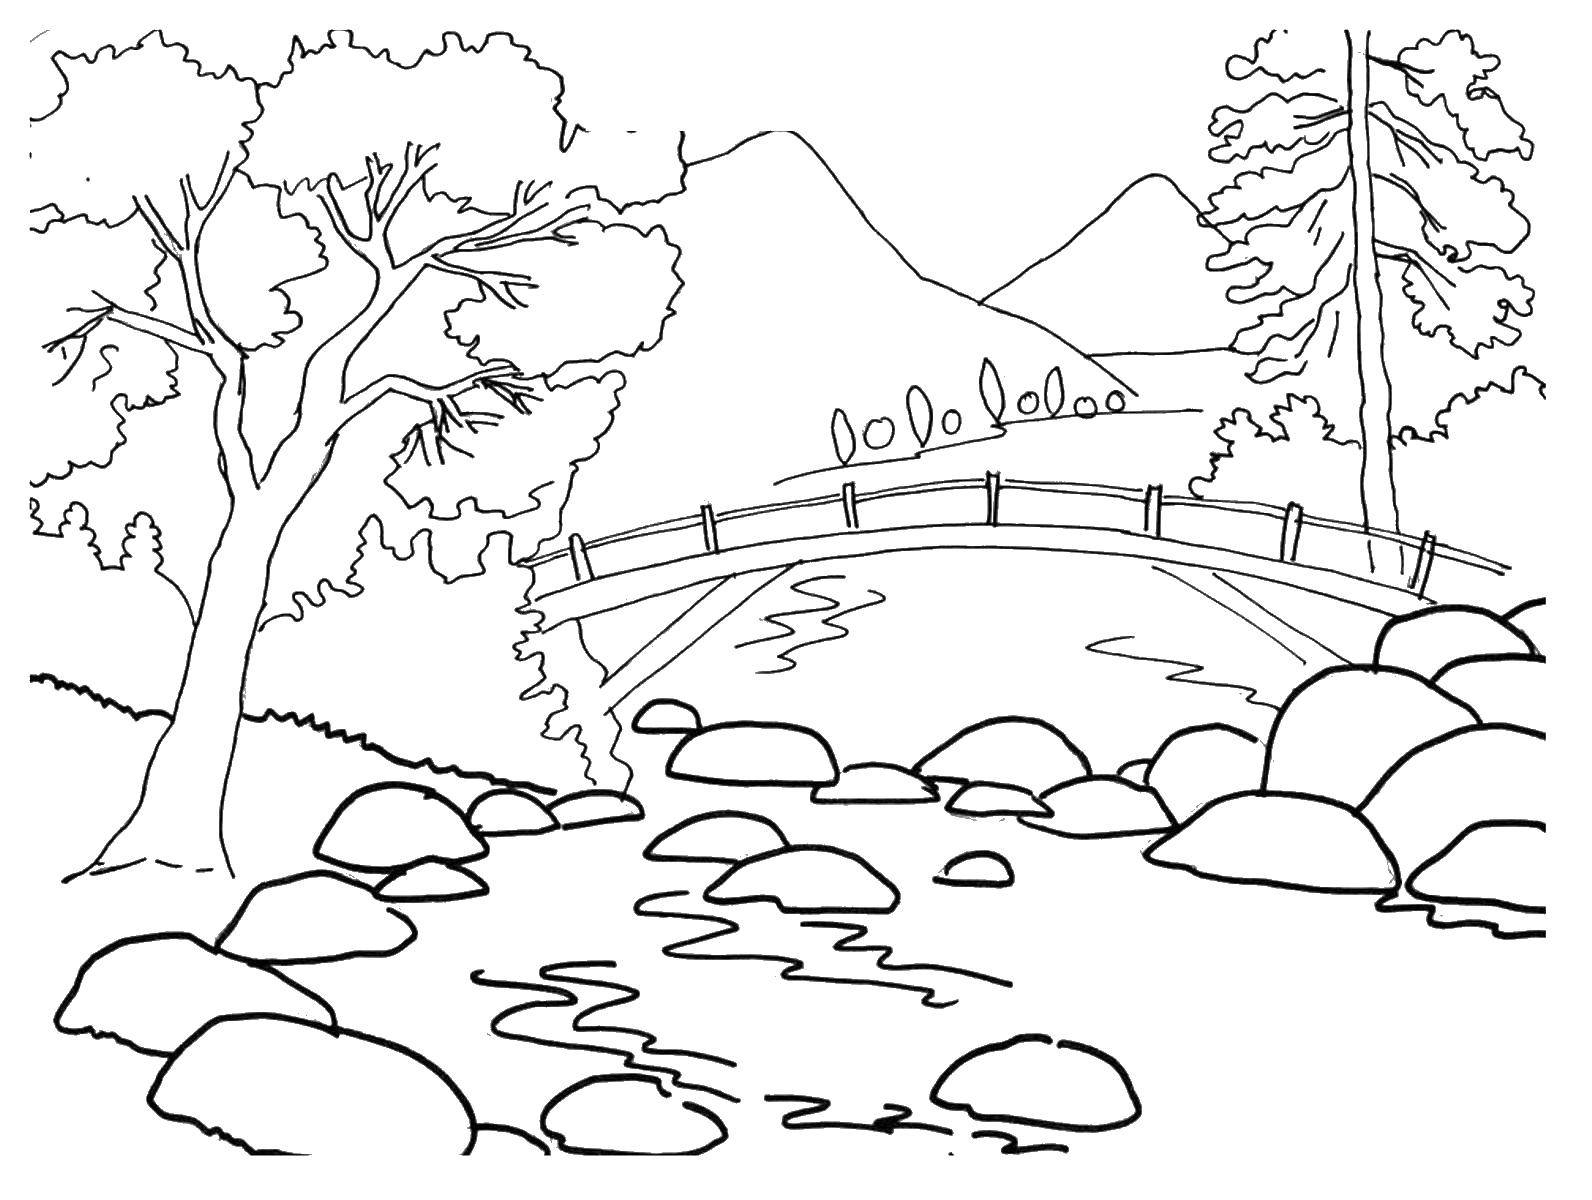 Название: Раскраска Мост через реку и дерево. Категория: Природа. Теги: мост, дерево, речка.